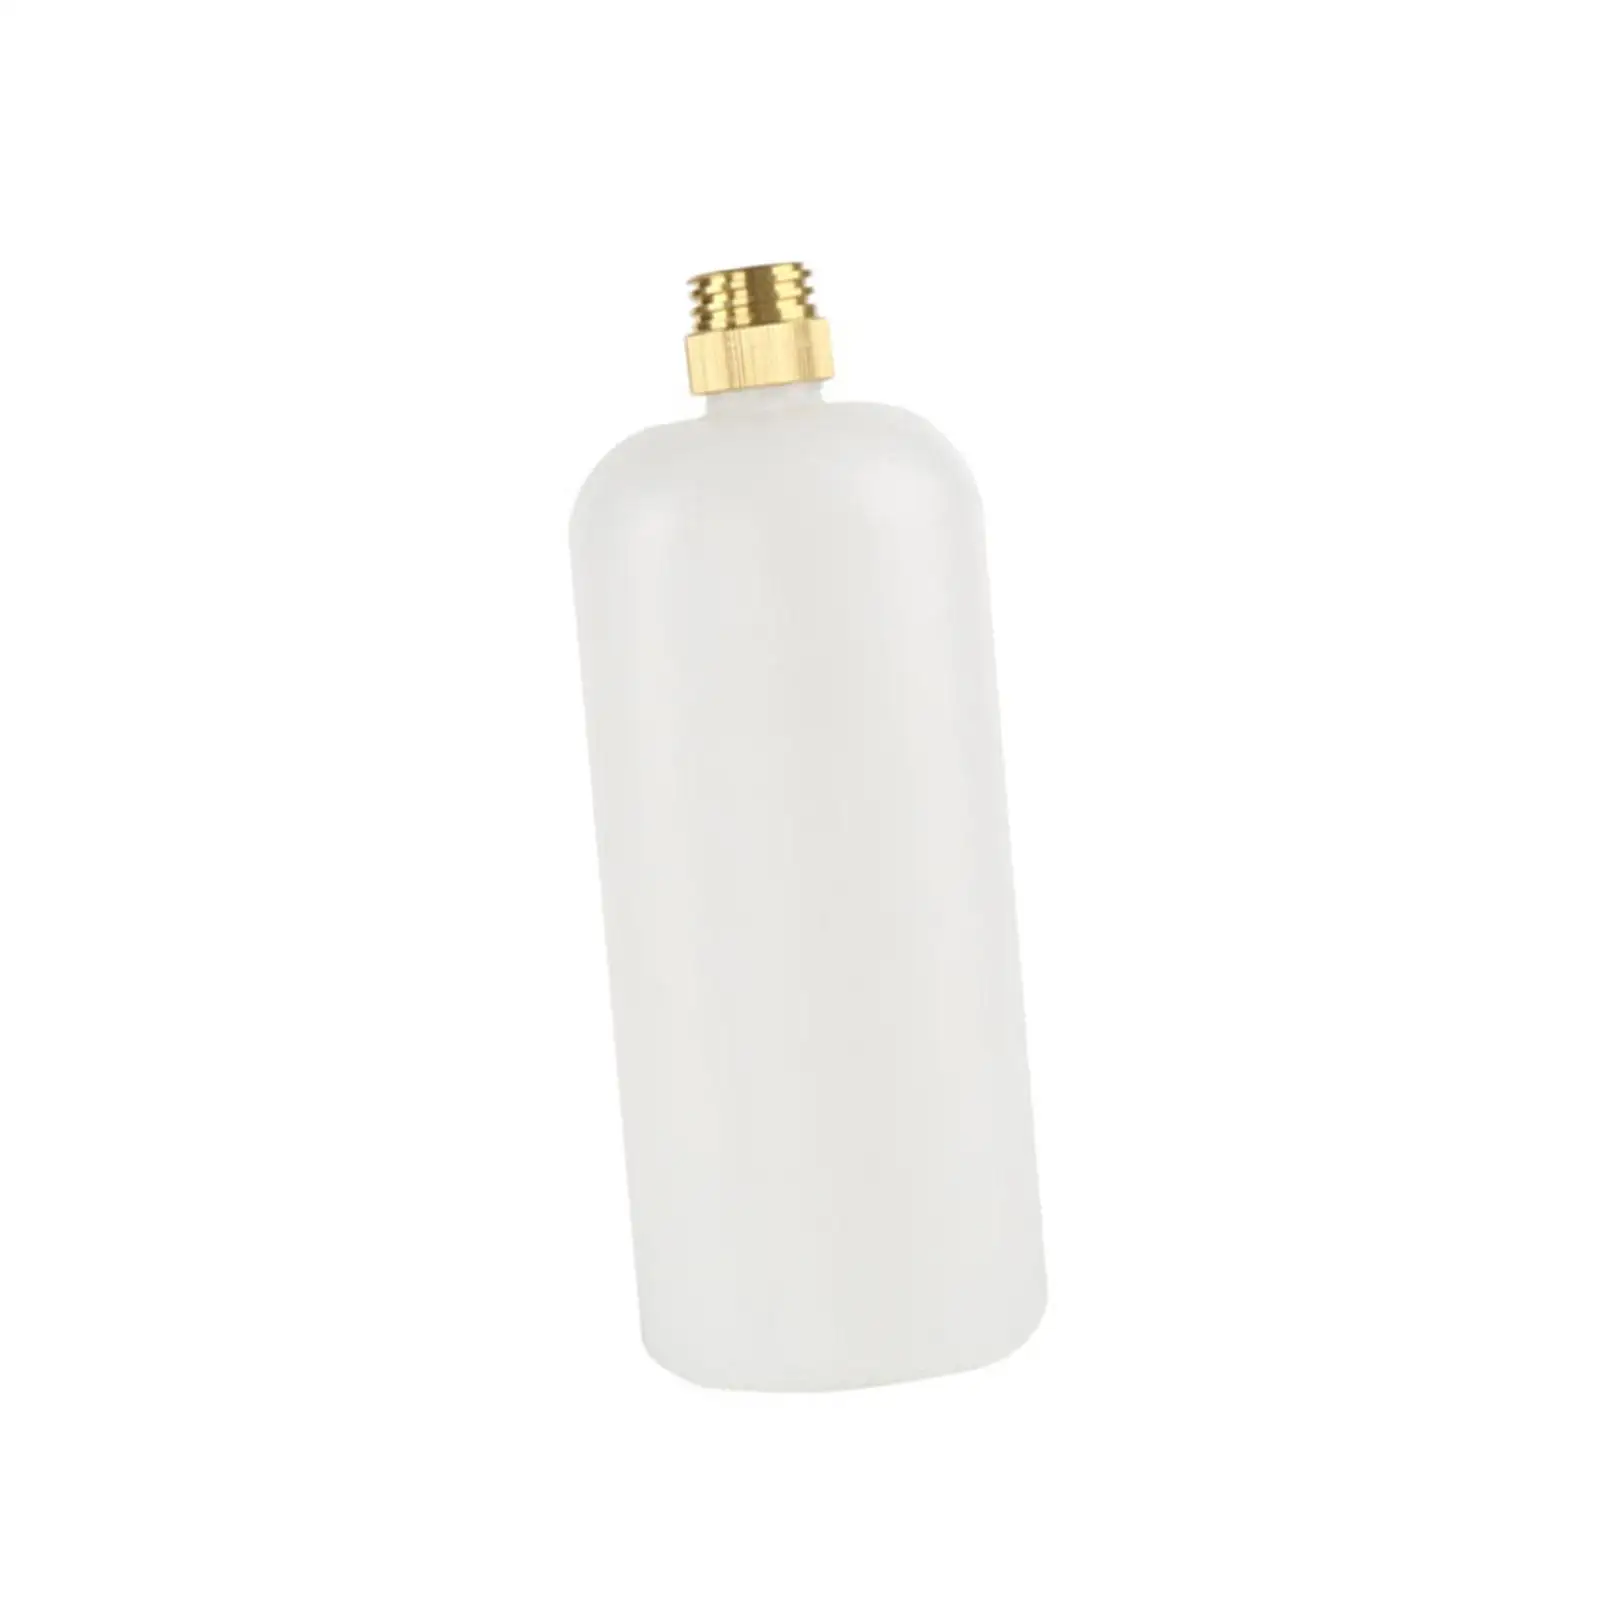 Car Foam Sprayer Bottle 1000ml Durable Container Hand Pump Water Sprayer for Foam Nozzle Snow Foam Lance Pressure Washer Parts